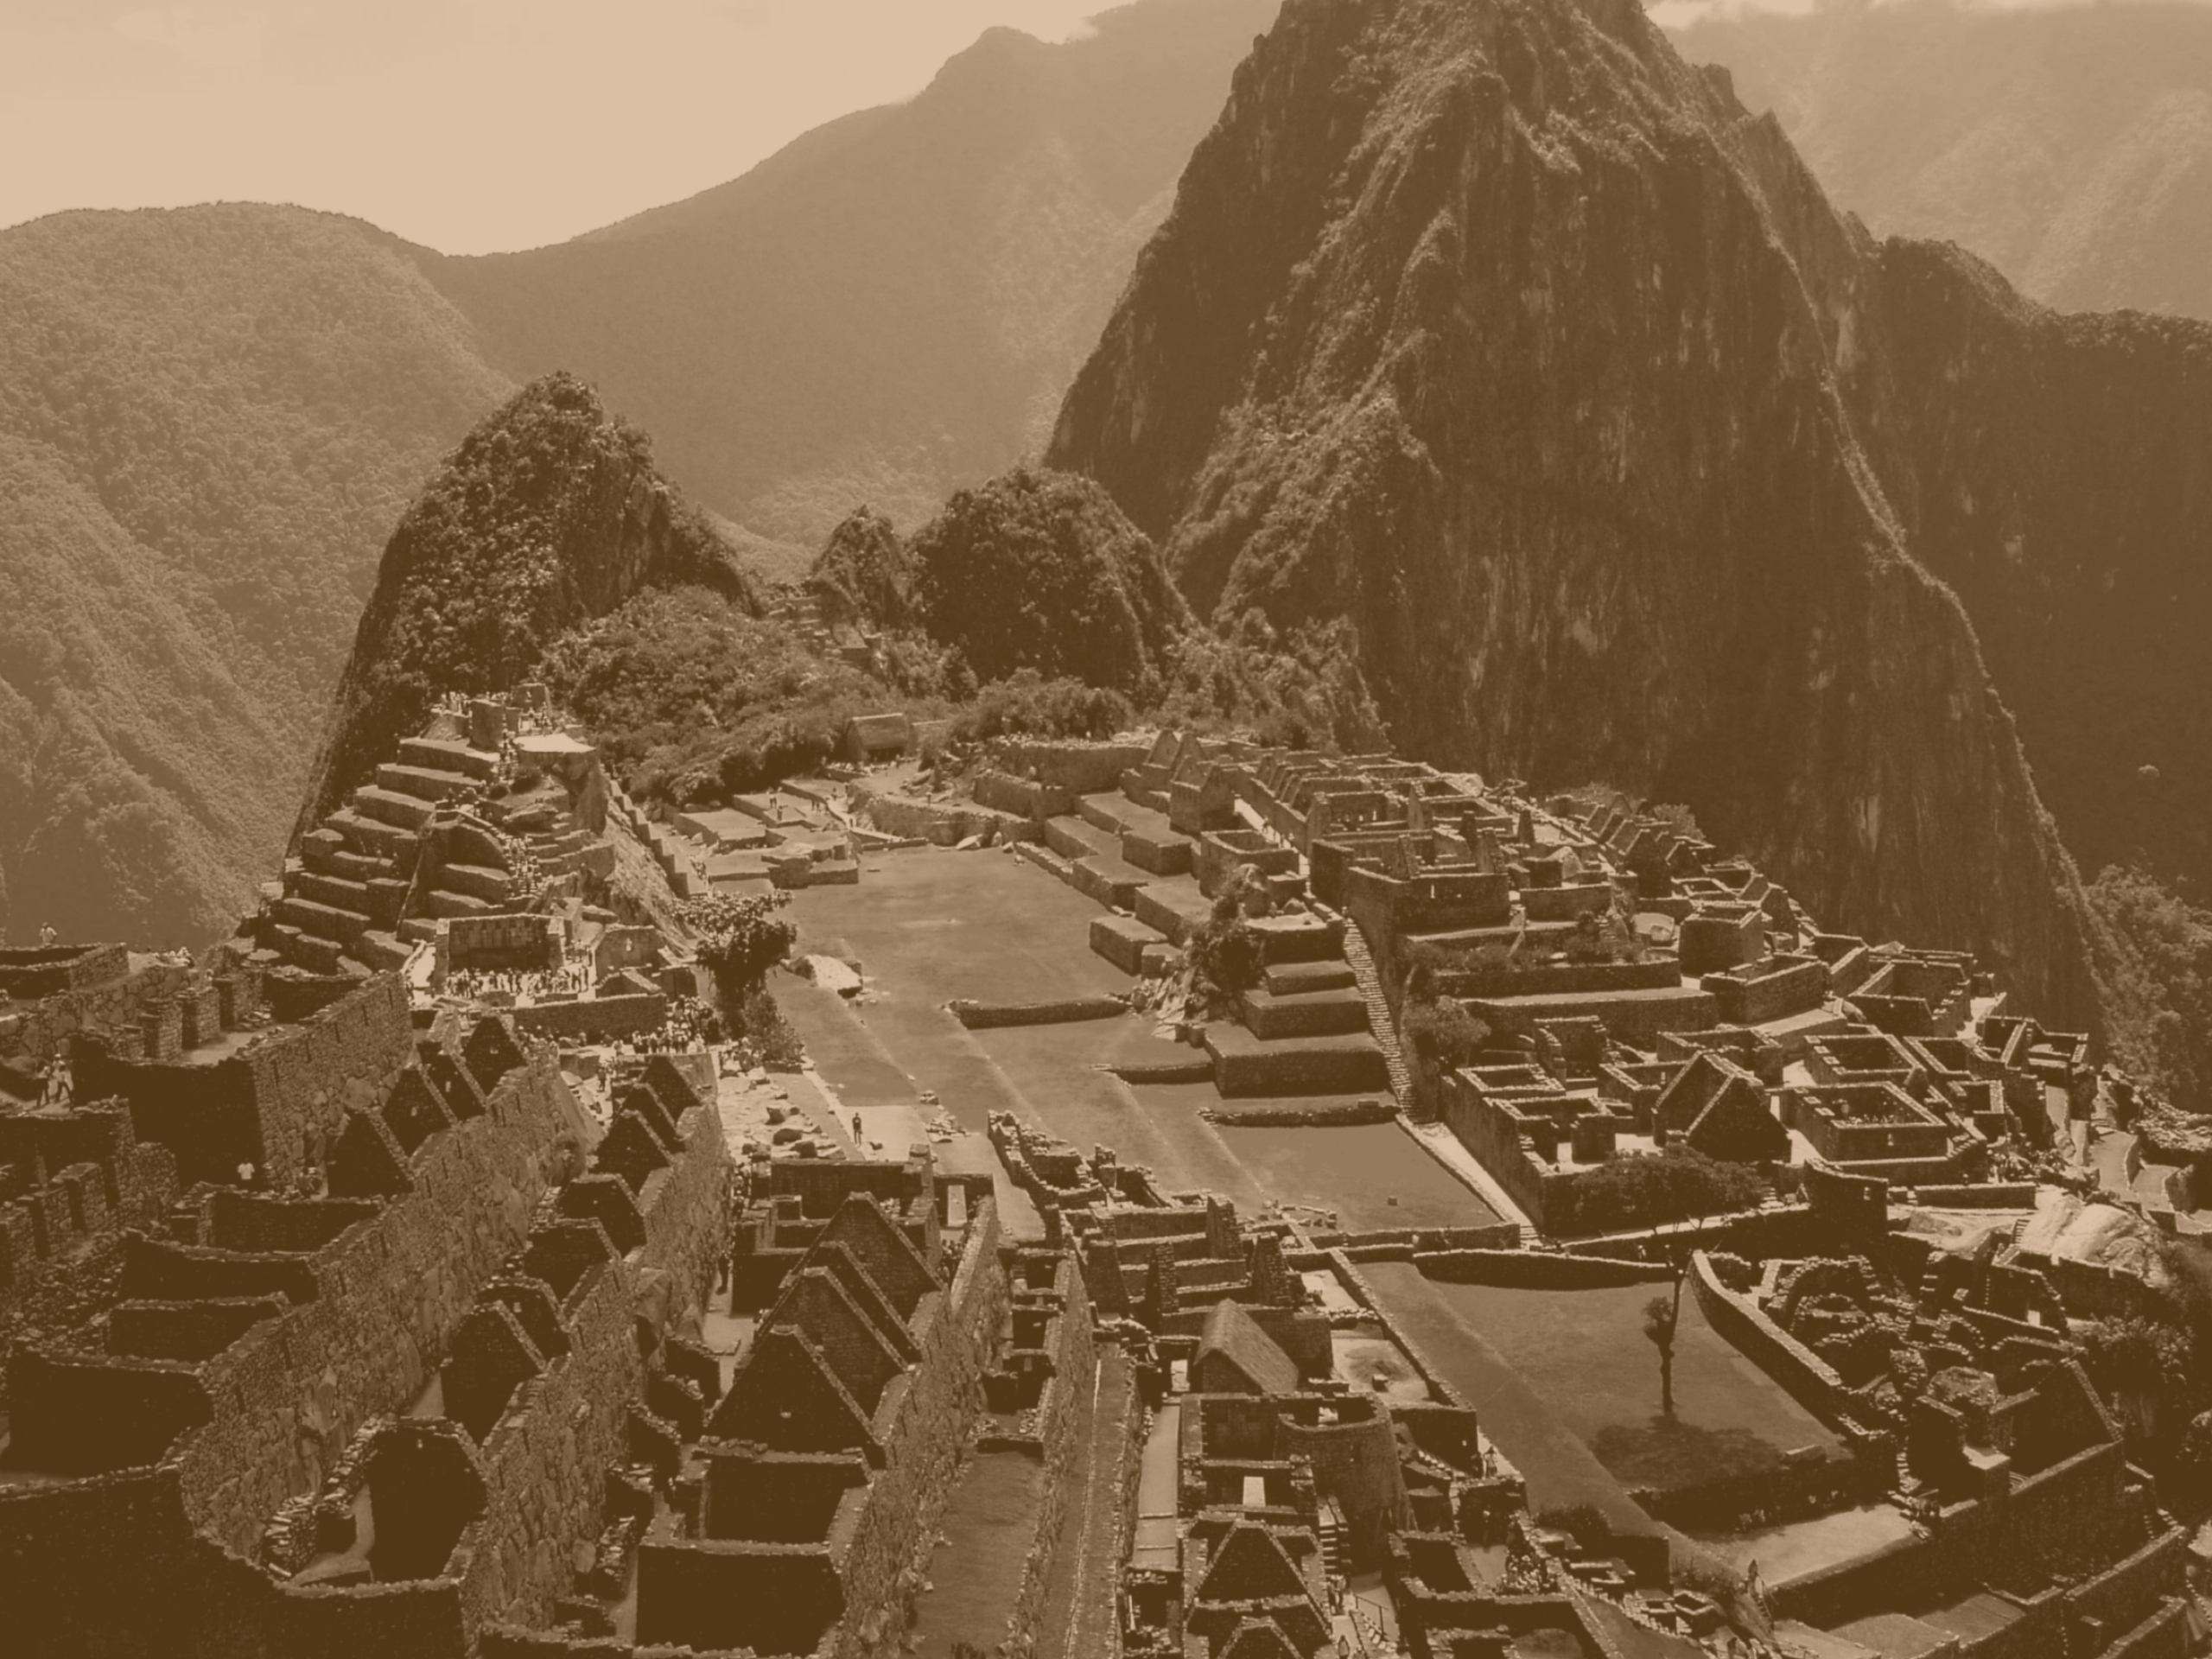 Peruvian Andes, HD wallpapers, Natural landscapes, Machu Picchu ruins, 2560x1920 HD Desktop